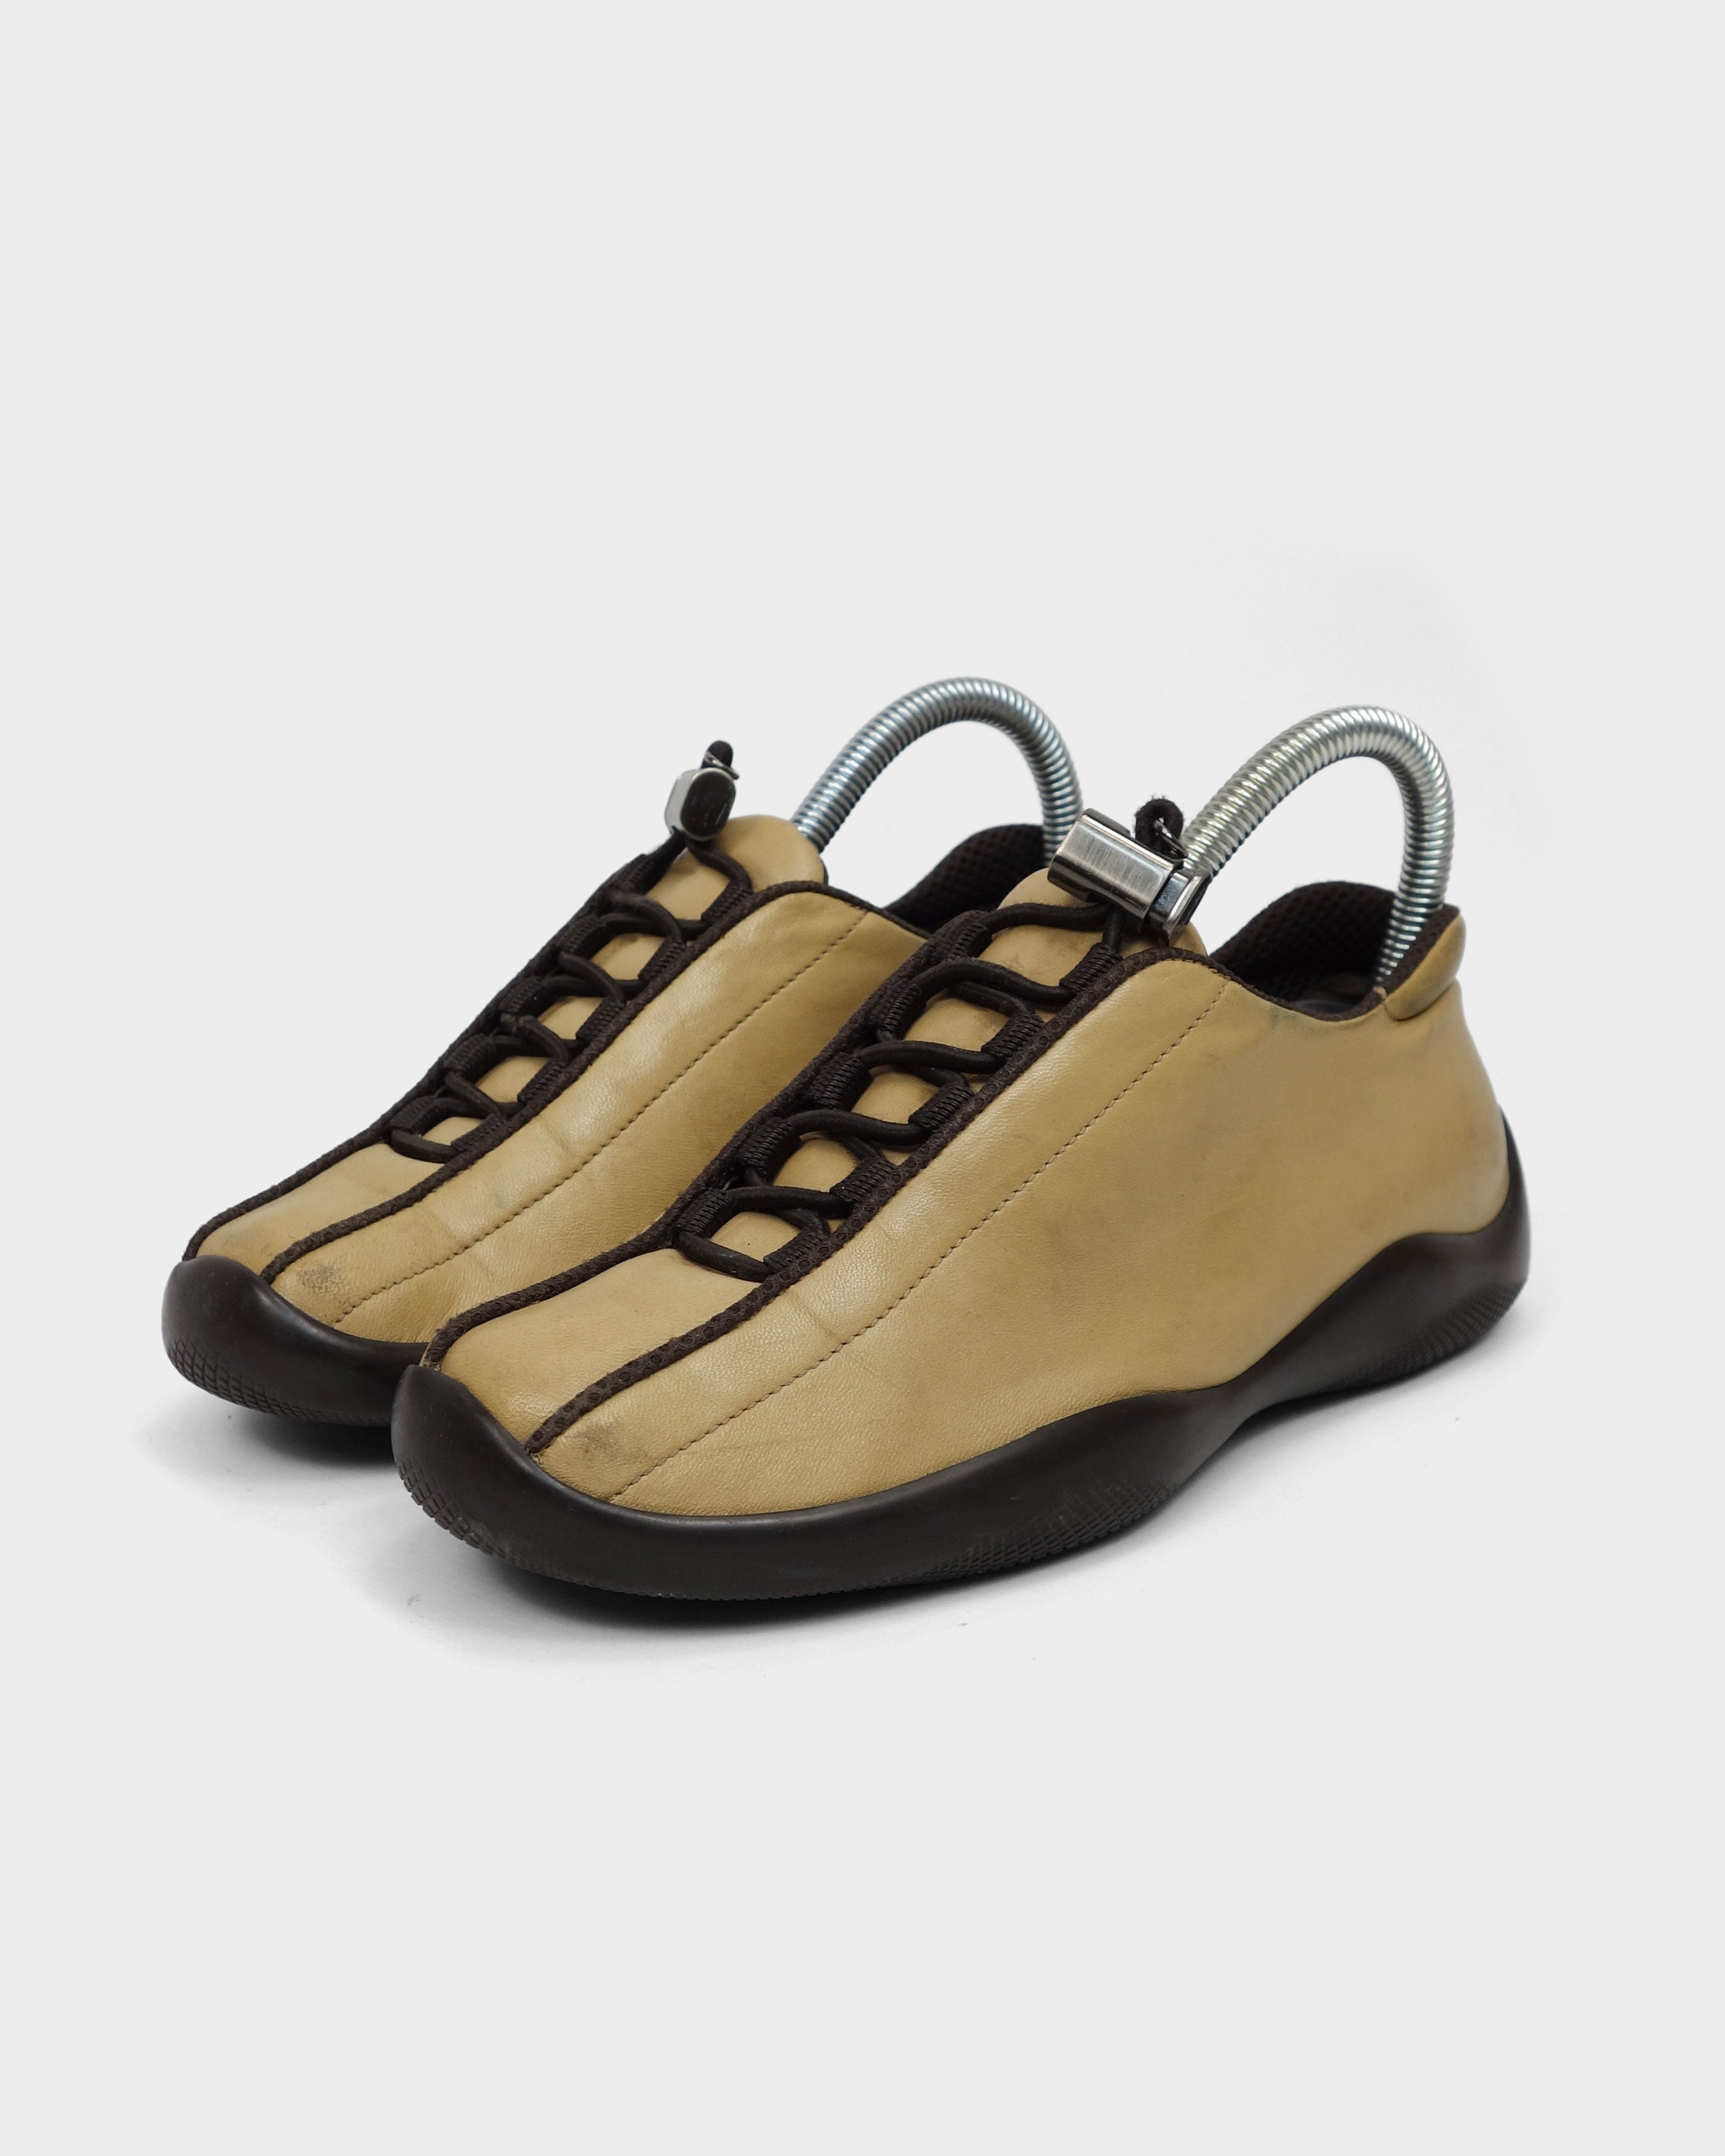 Prada Nappa Sport Beige Leather Sneakers 2000's – Vintage TTS